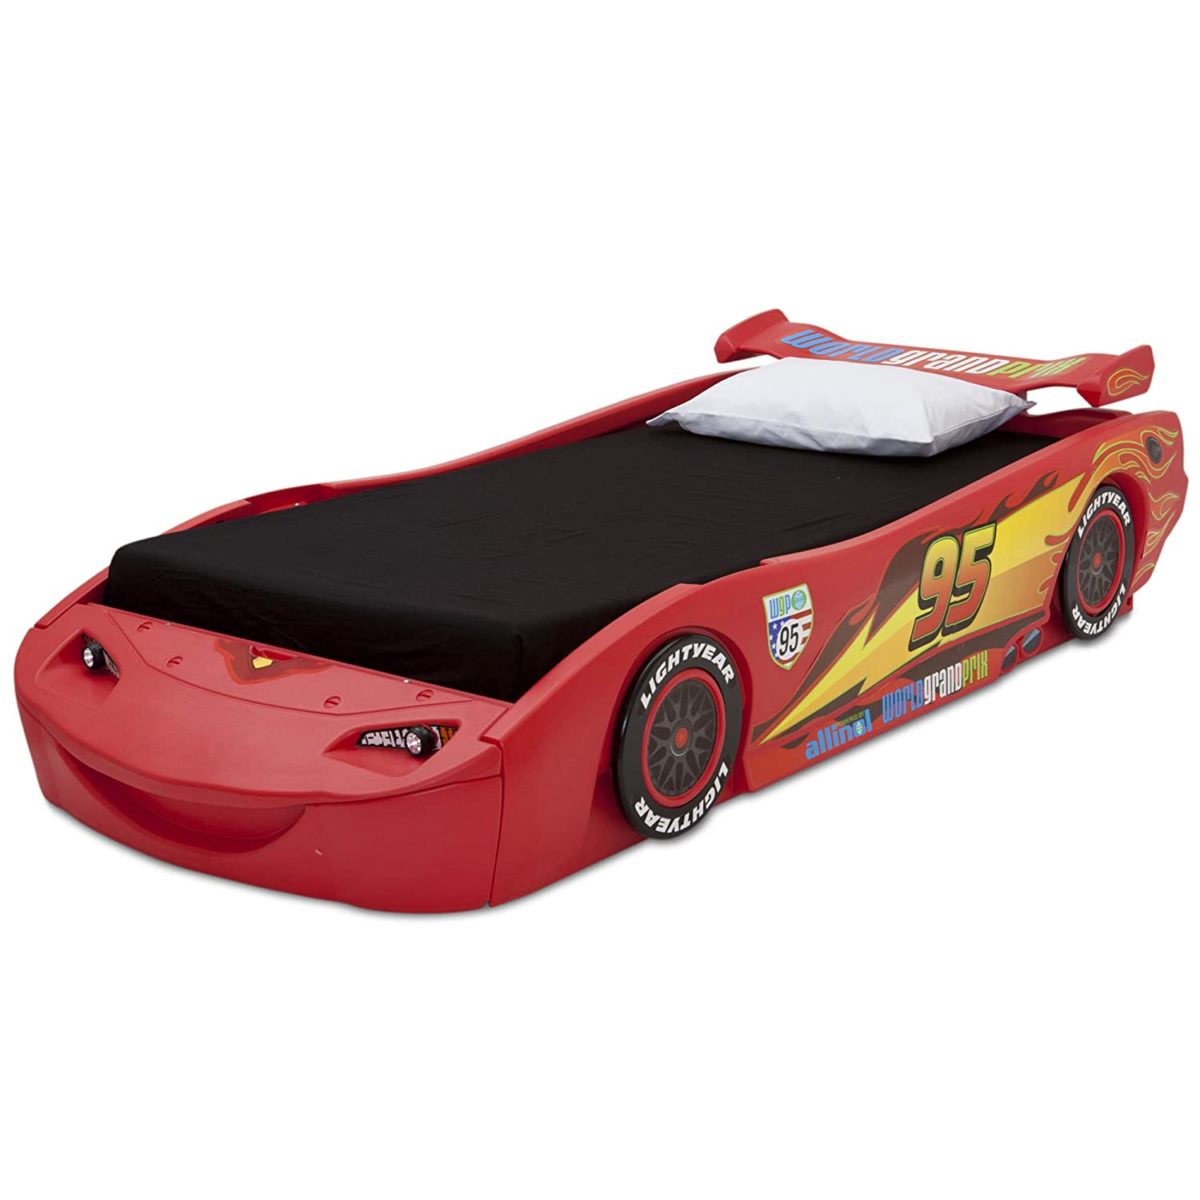 Disney Cars bed